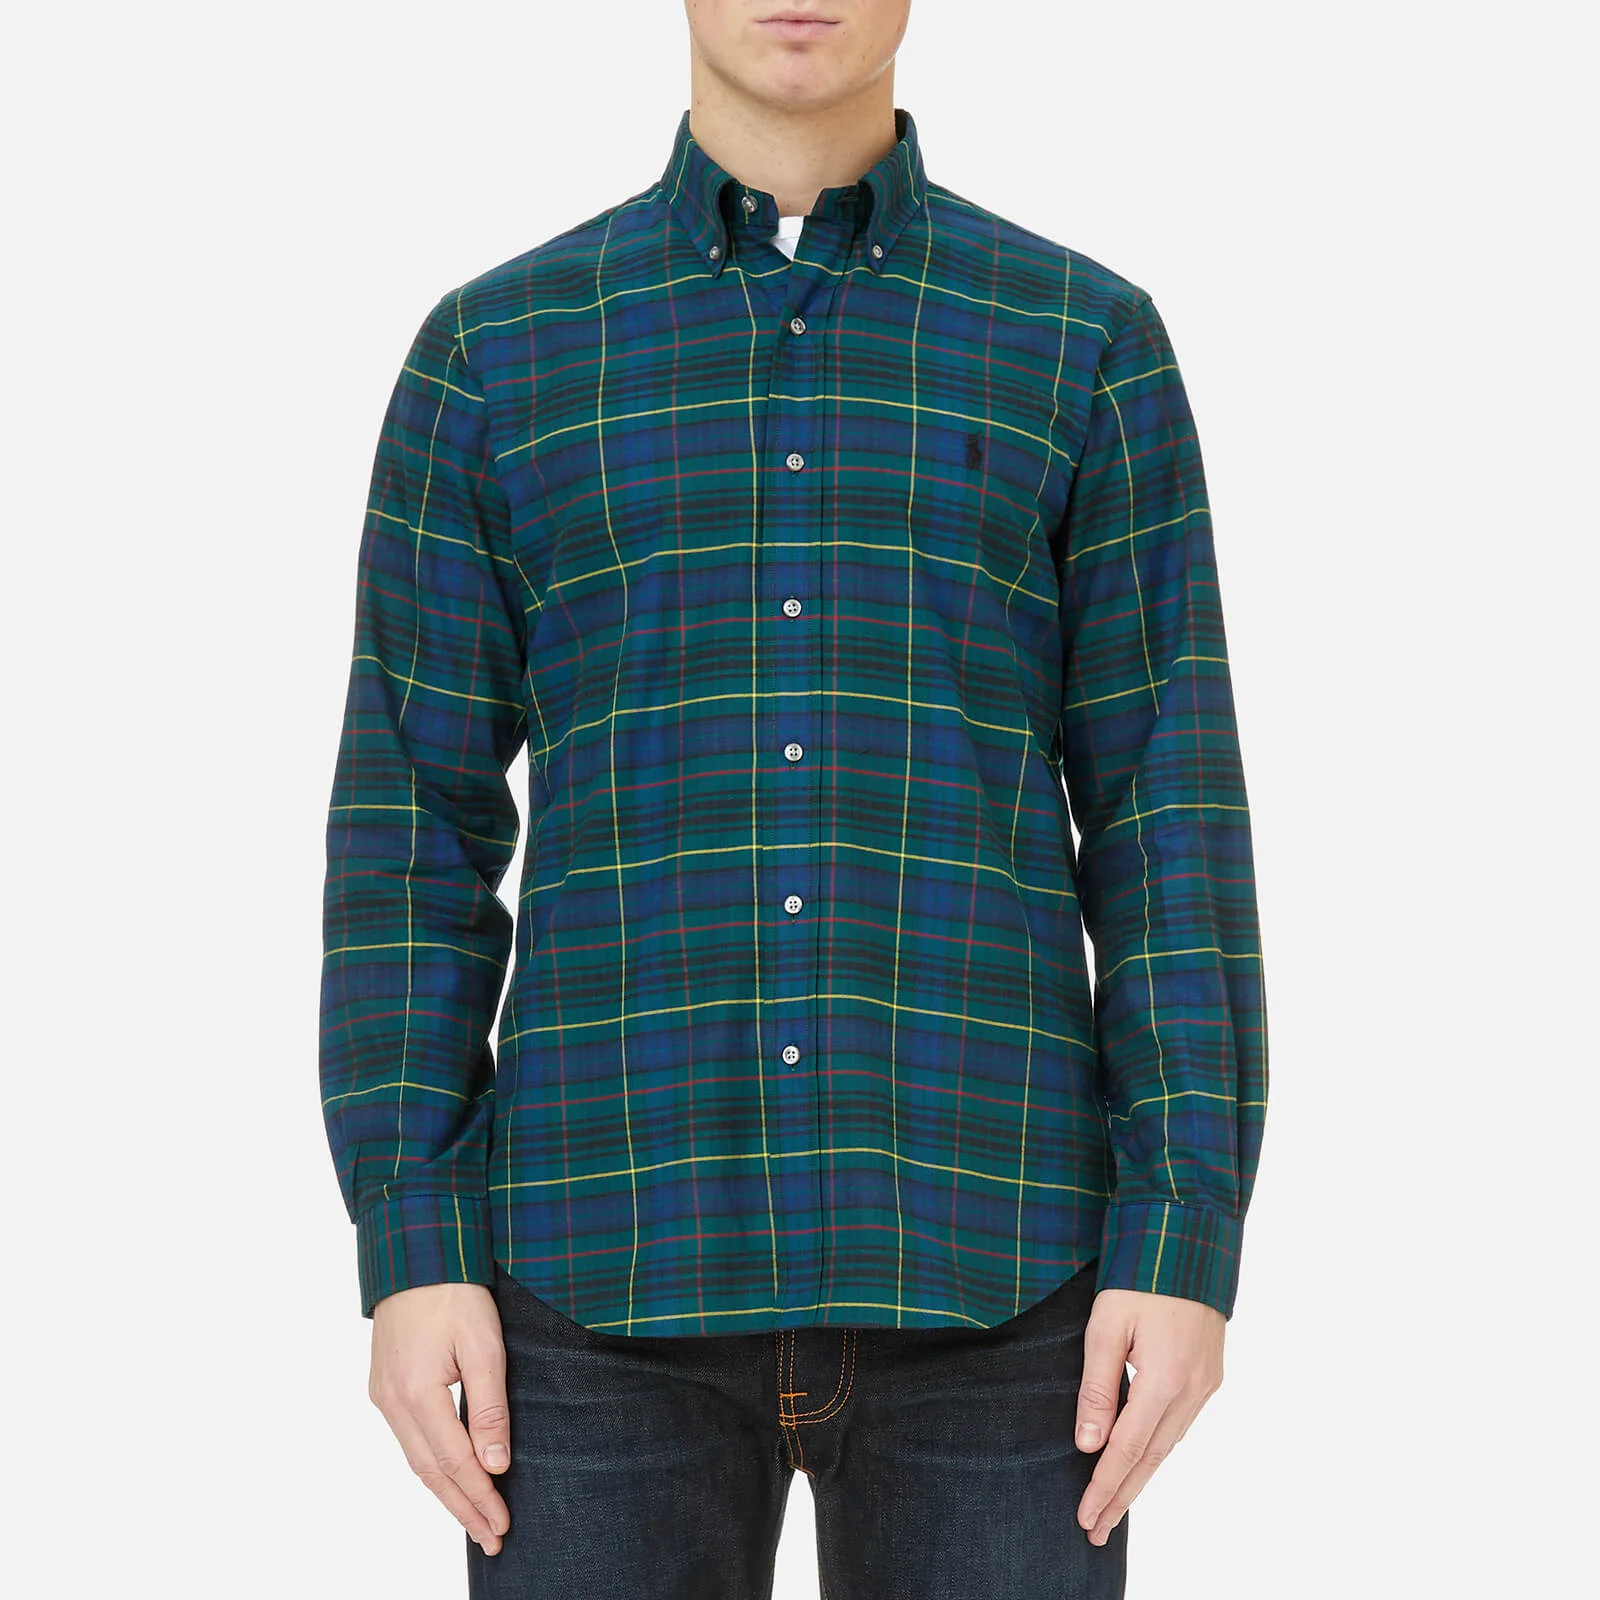 Polo Ralph Lauren Men's Brushed Twill Shirt - Green Check Image 1